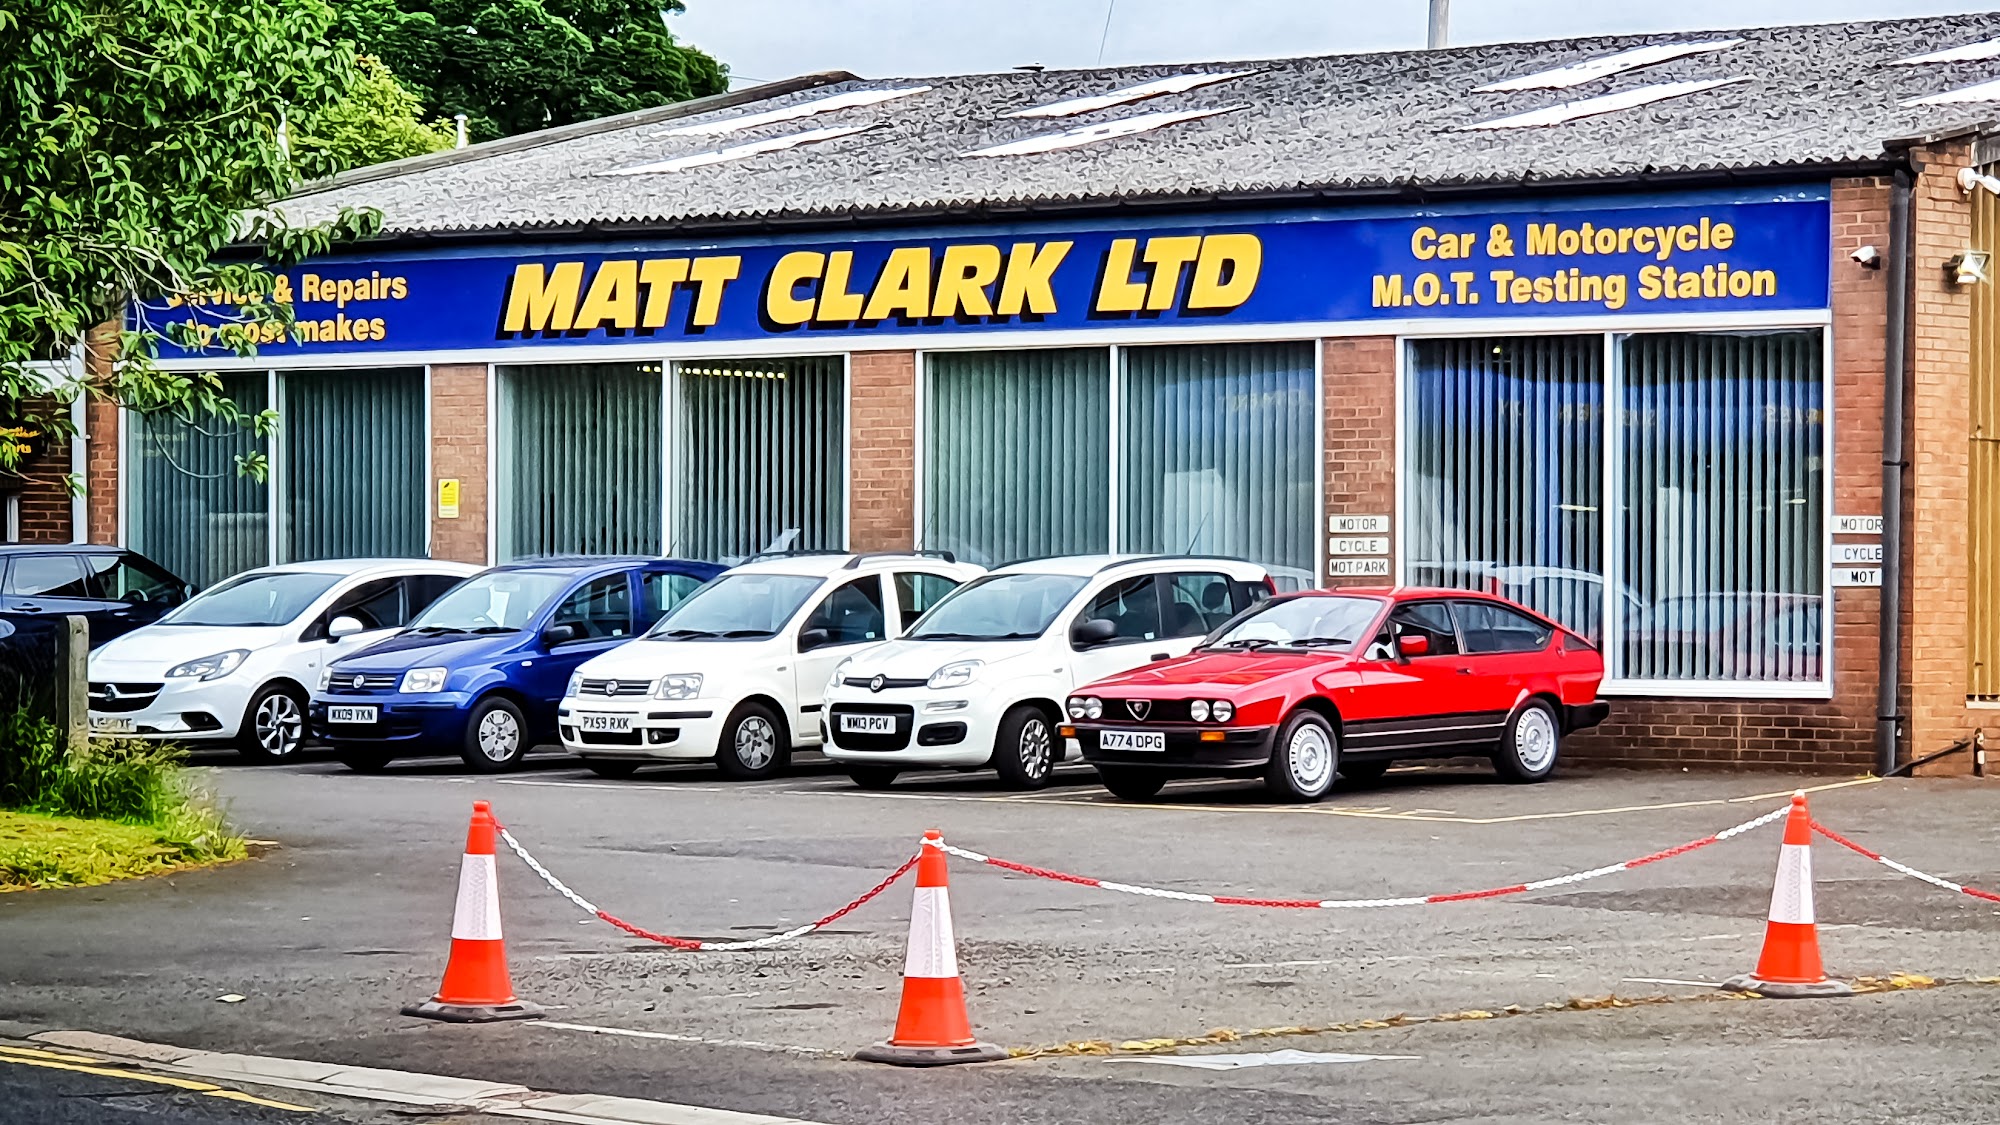 Matt Clark Ltd